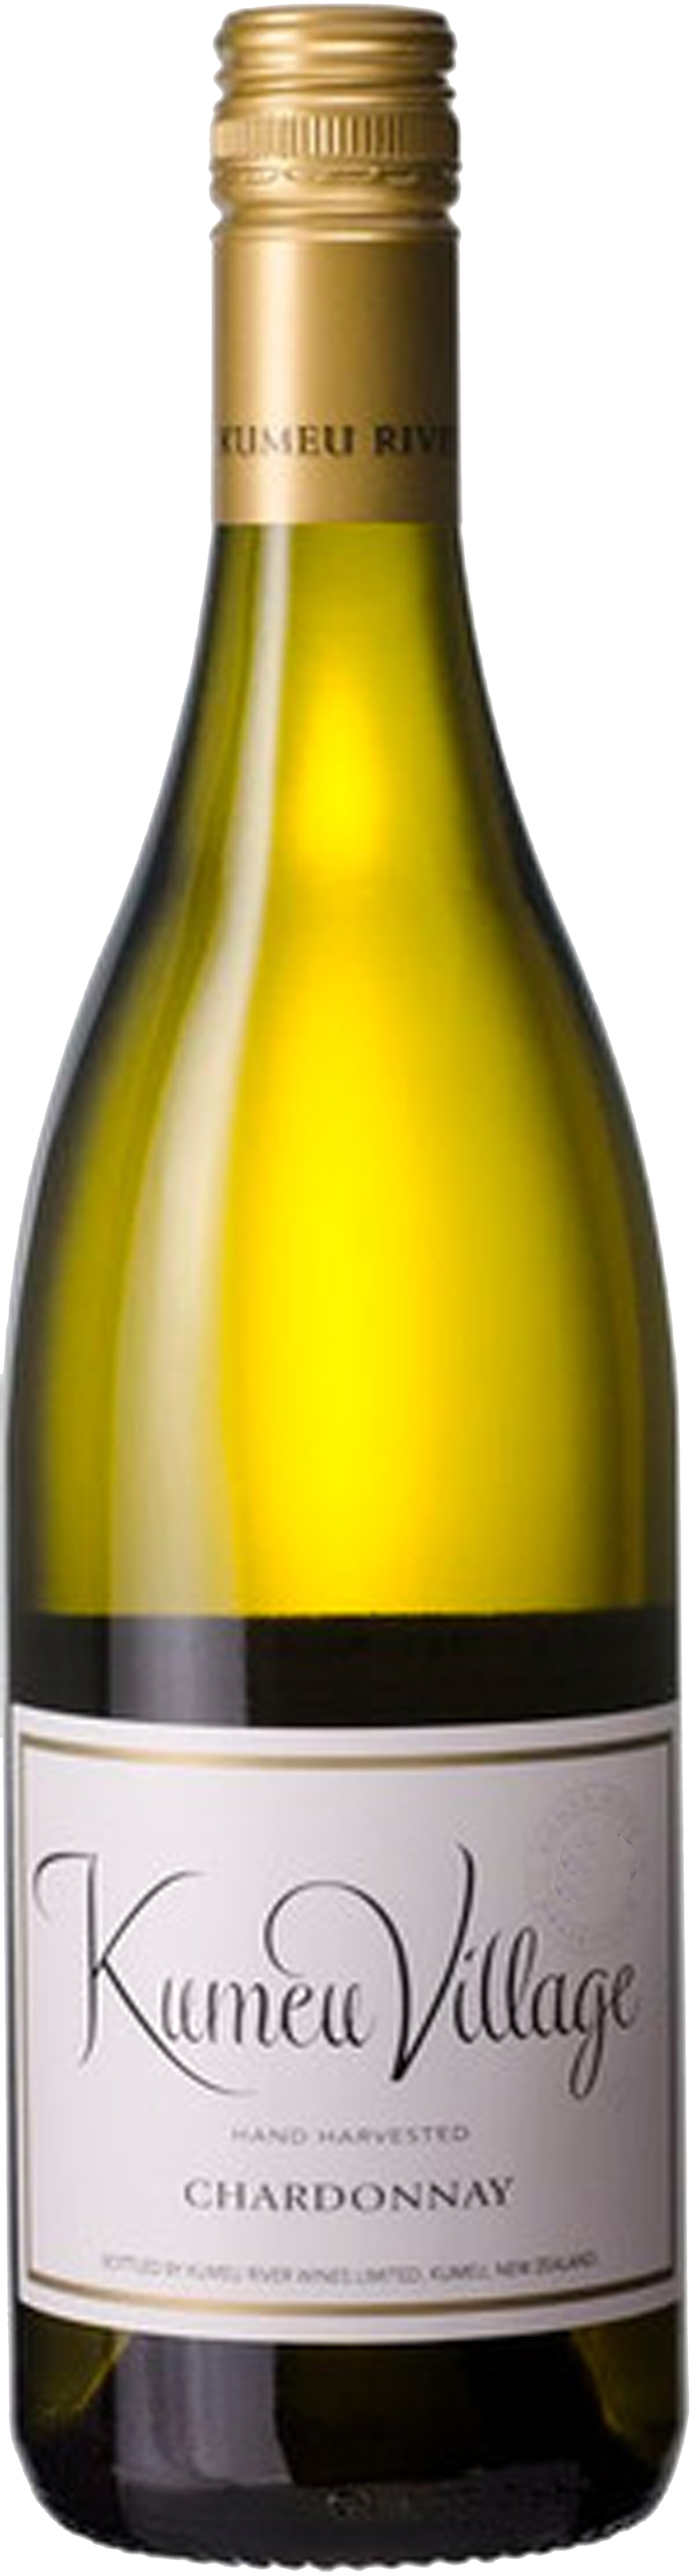 Bottle shot of 2014 Village Chardonnay